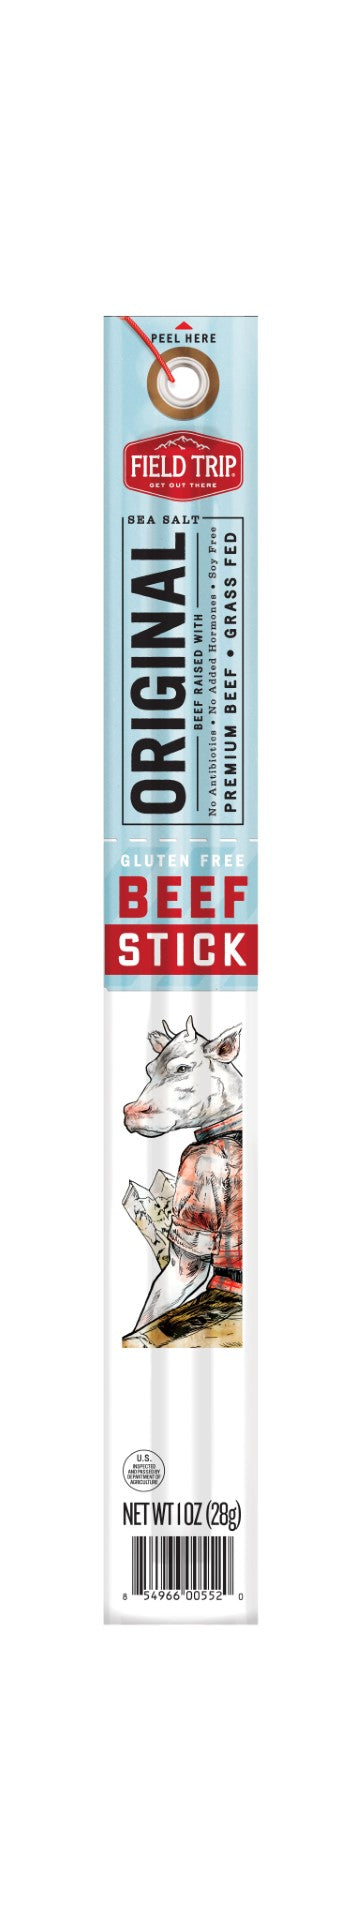 Stick Beef Original 1 Ounce Size - 144 Per Case.